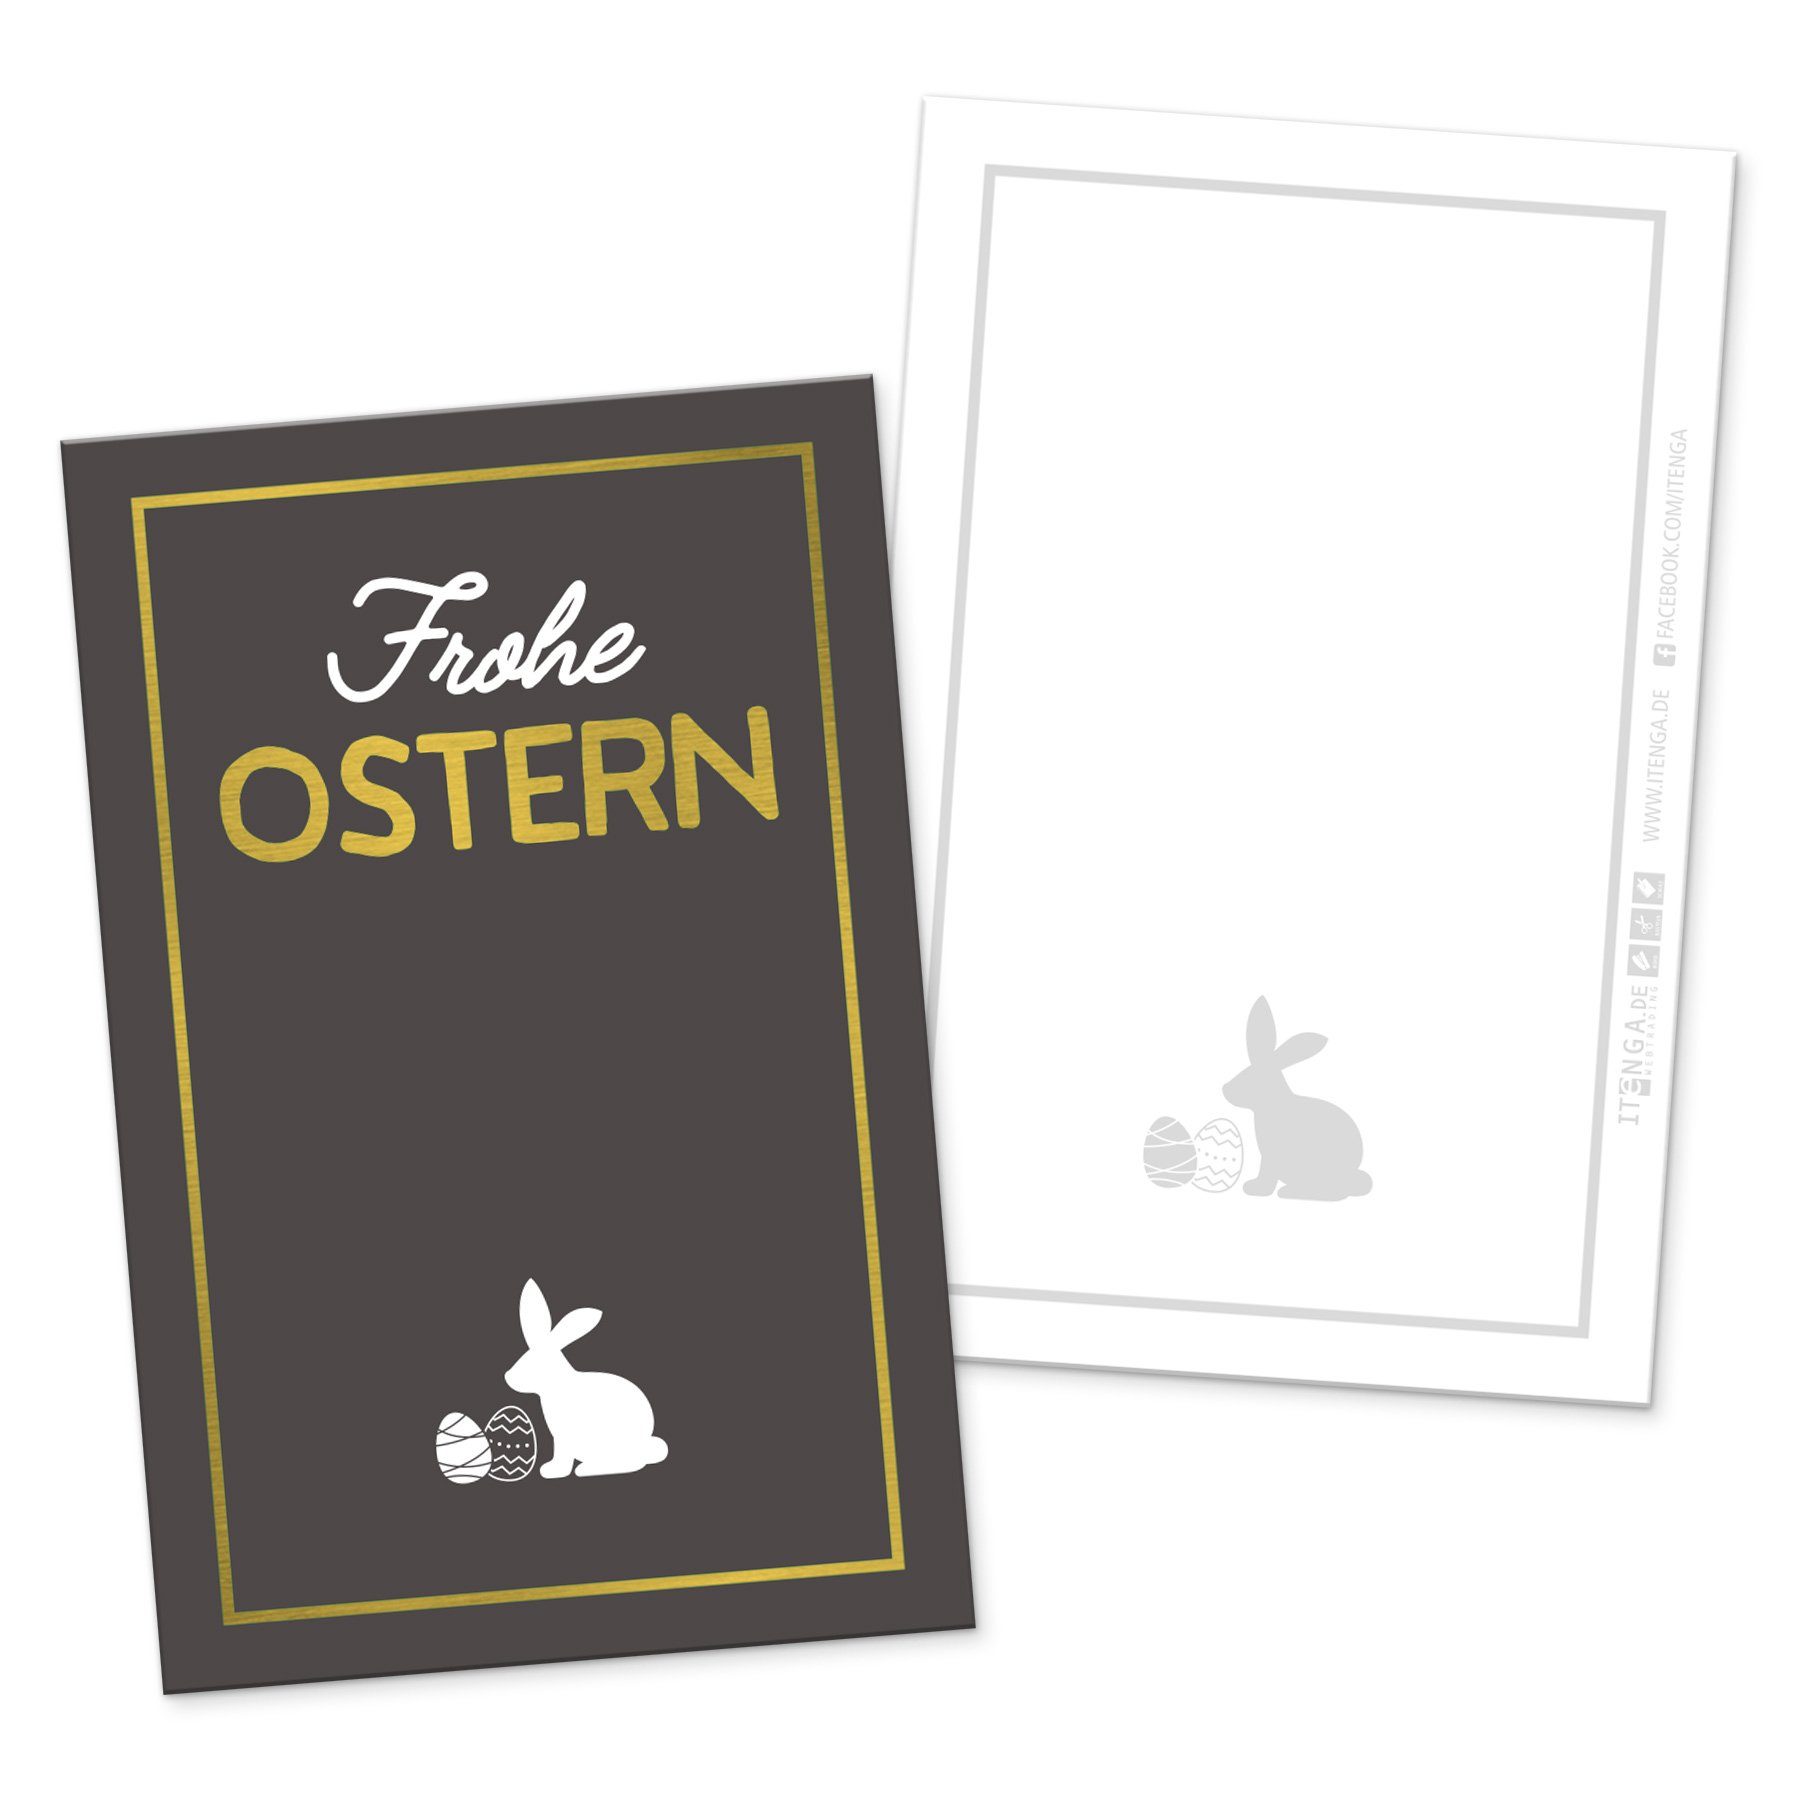 itenga Grußkarten itenga 24 x Geschenkekarten Frohe Ostern dunkelgrau weiß gold in Visit